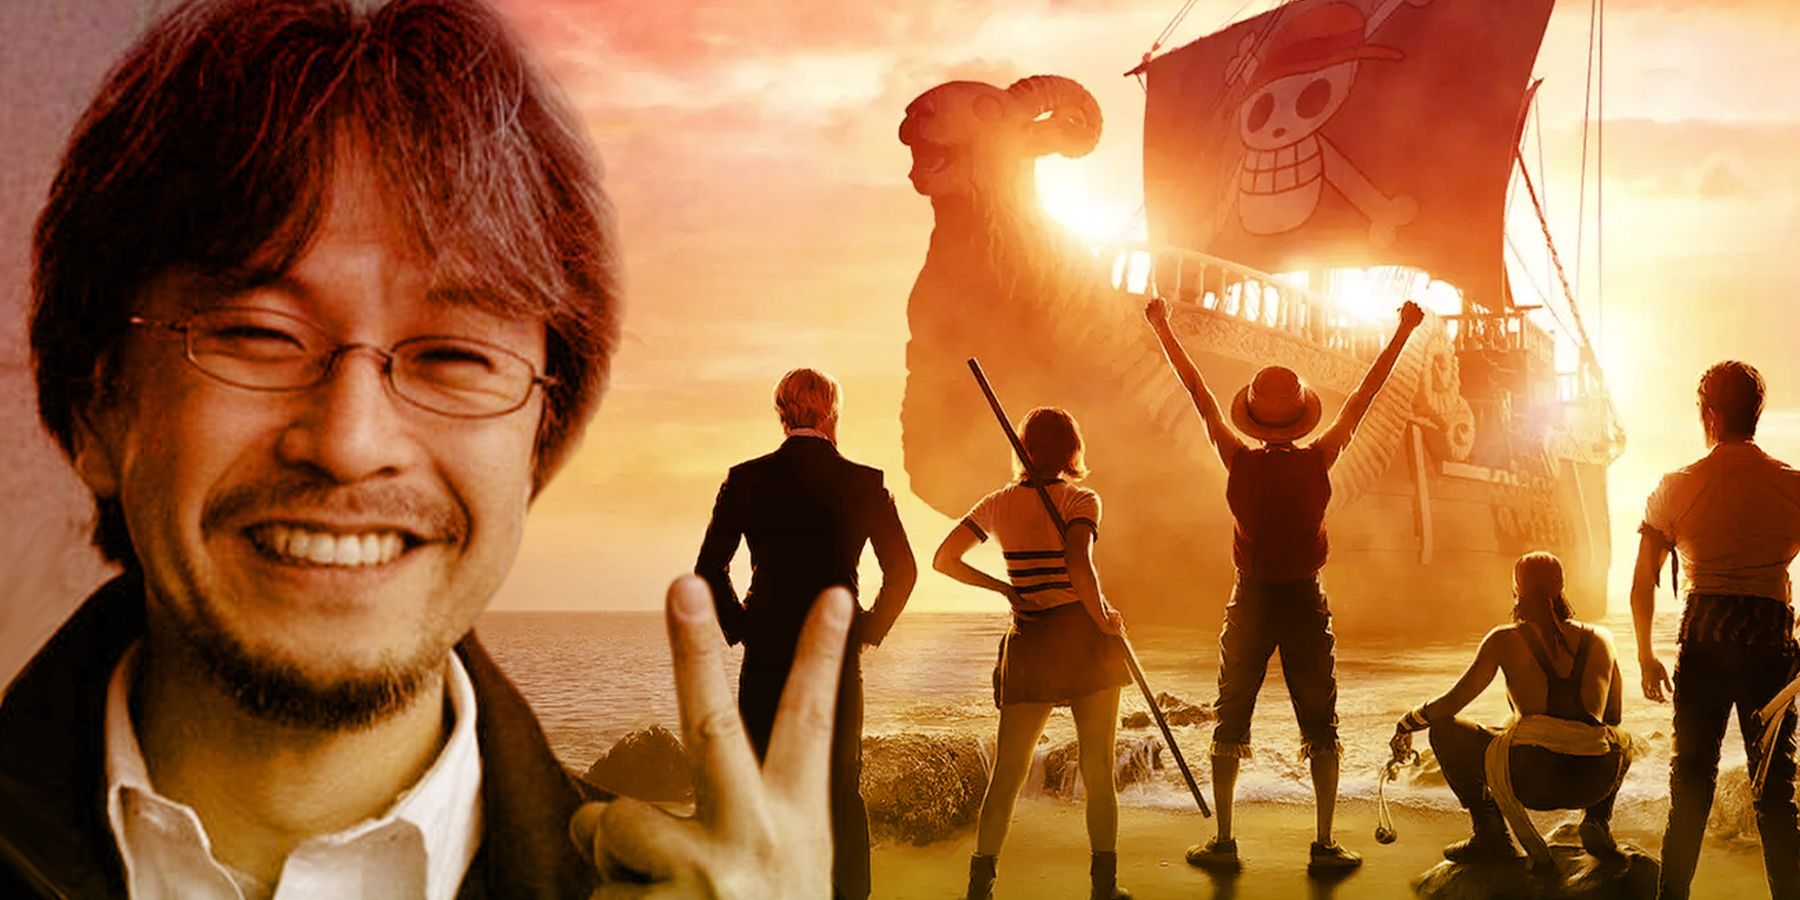 How One Piece Creator Eiichiro Oda Gave Notes for the Netflix Show